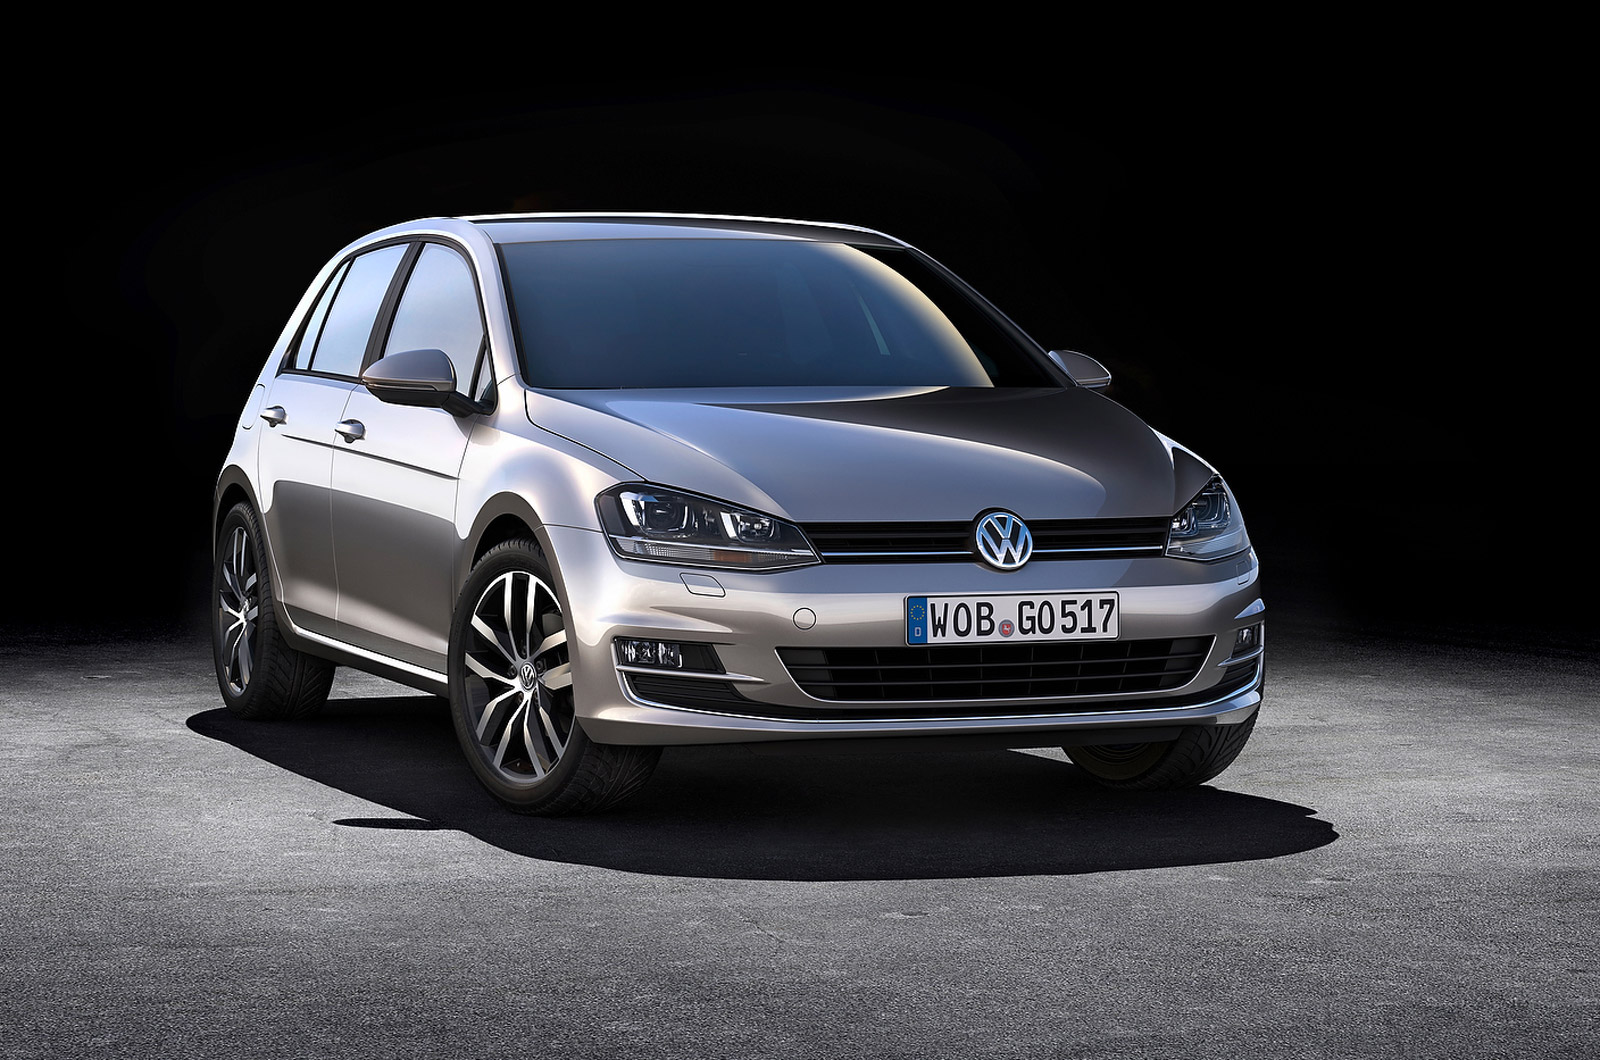 Volkswagen Golf Mk7 engine lineup announced Autocar